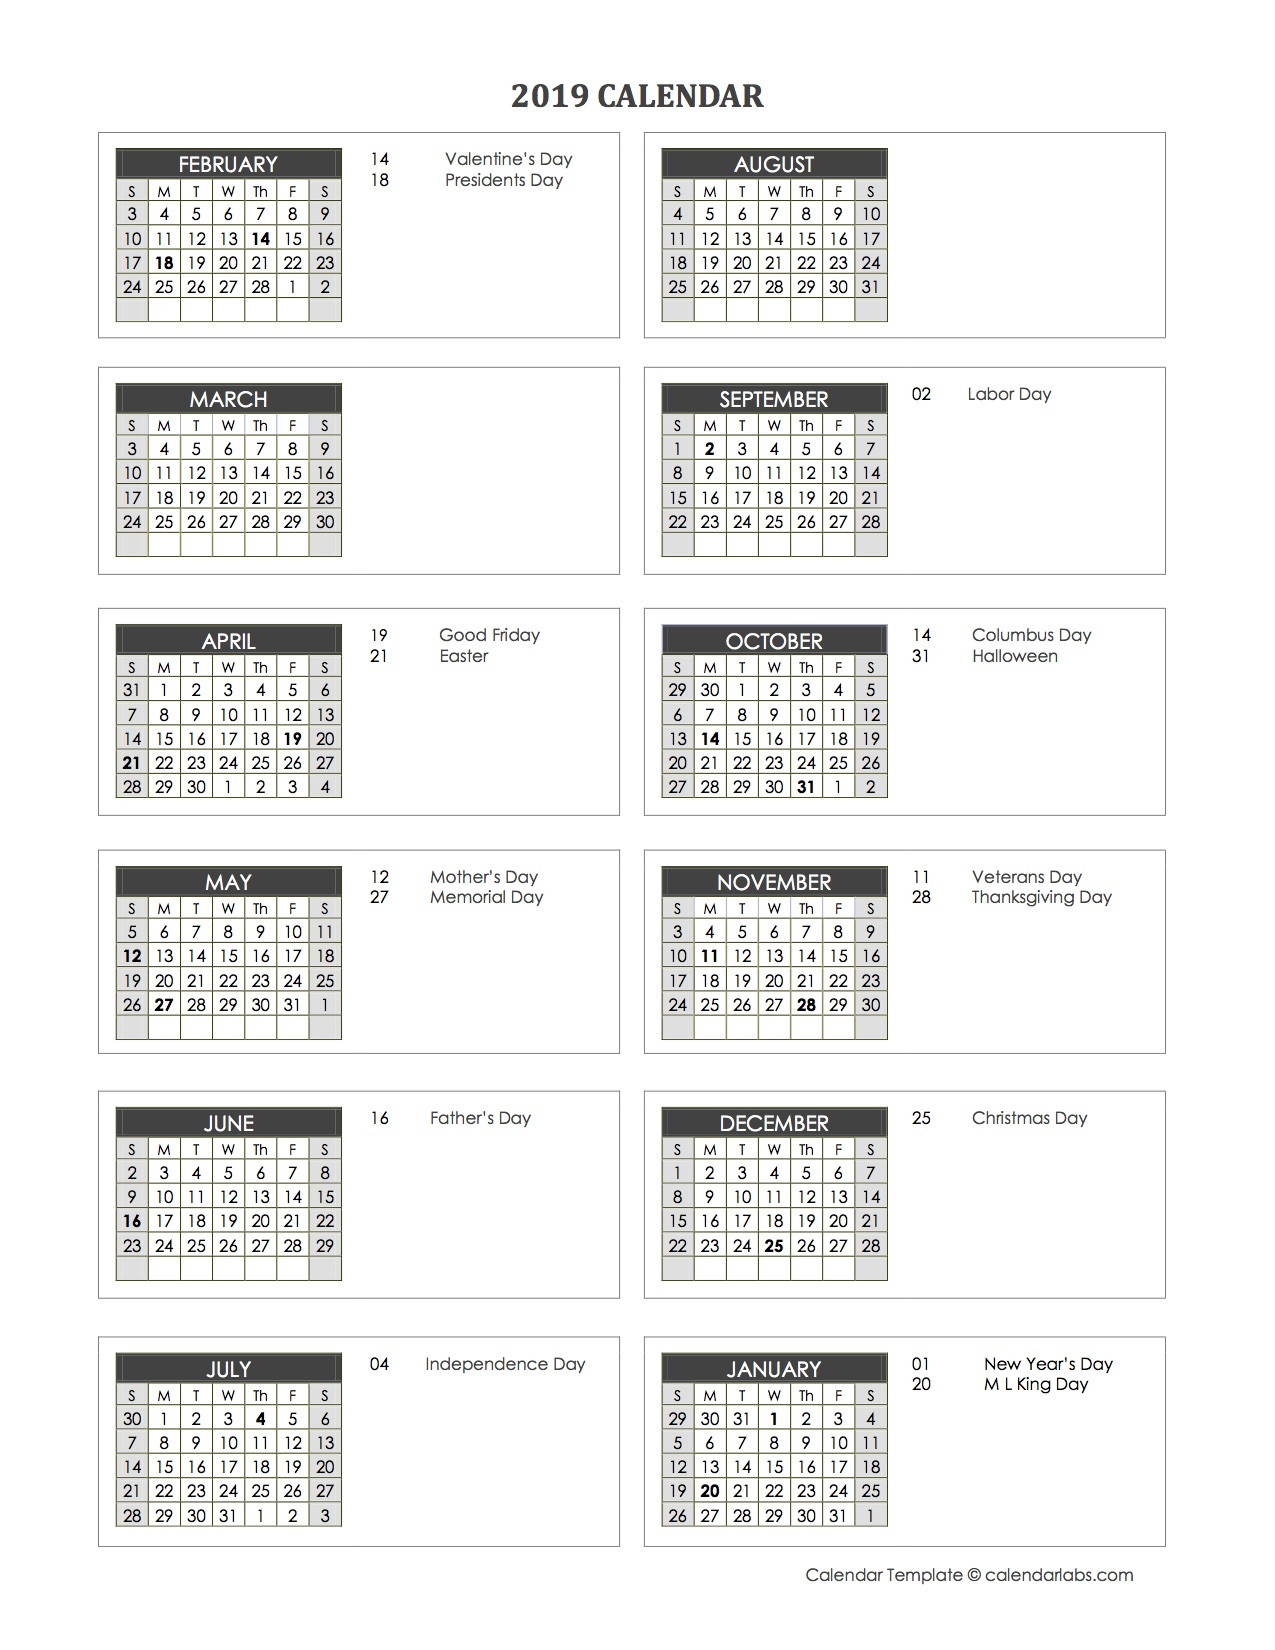 2019 Accounting Month End Close Calendar - Free Printable-4 4 5 Calendar Template